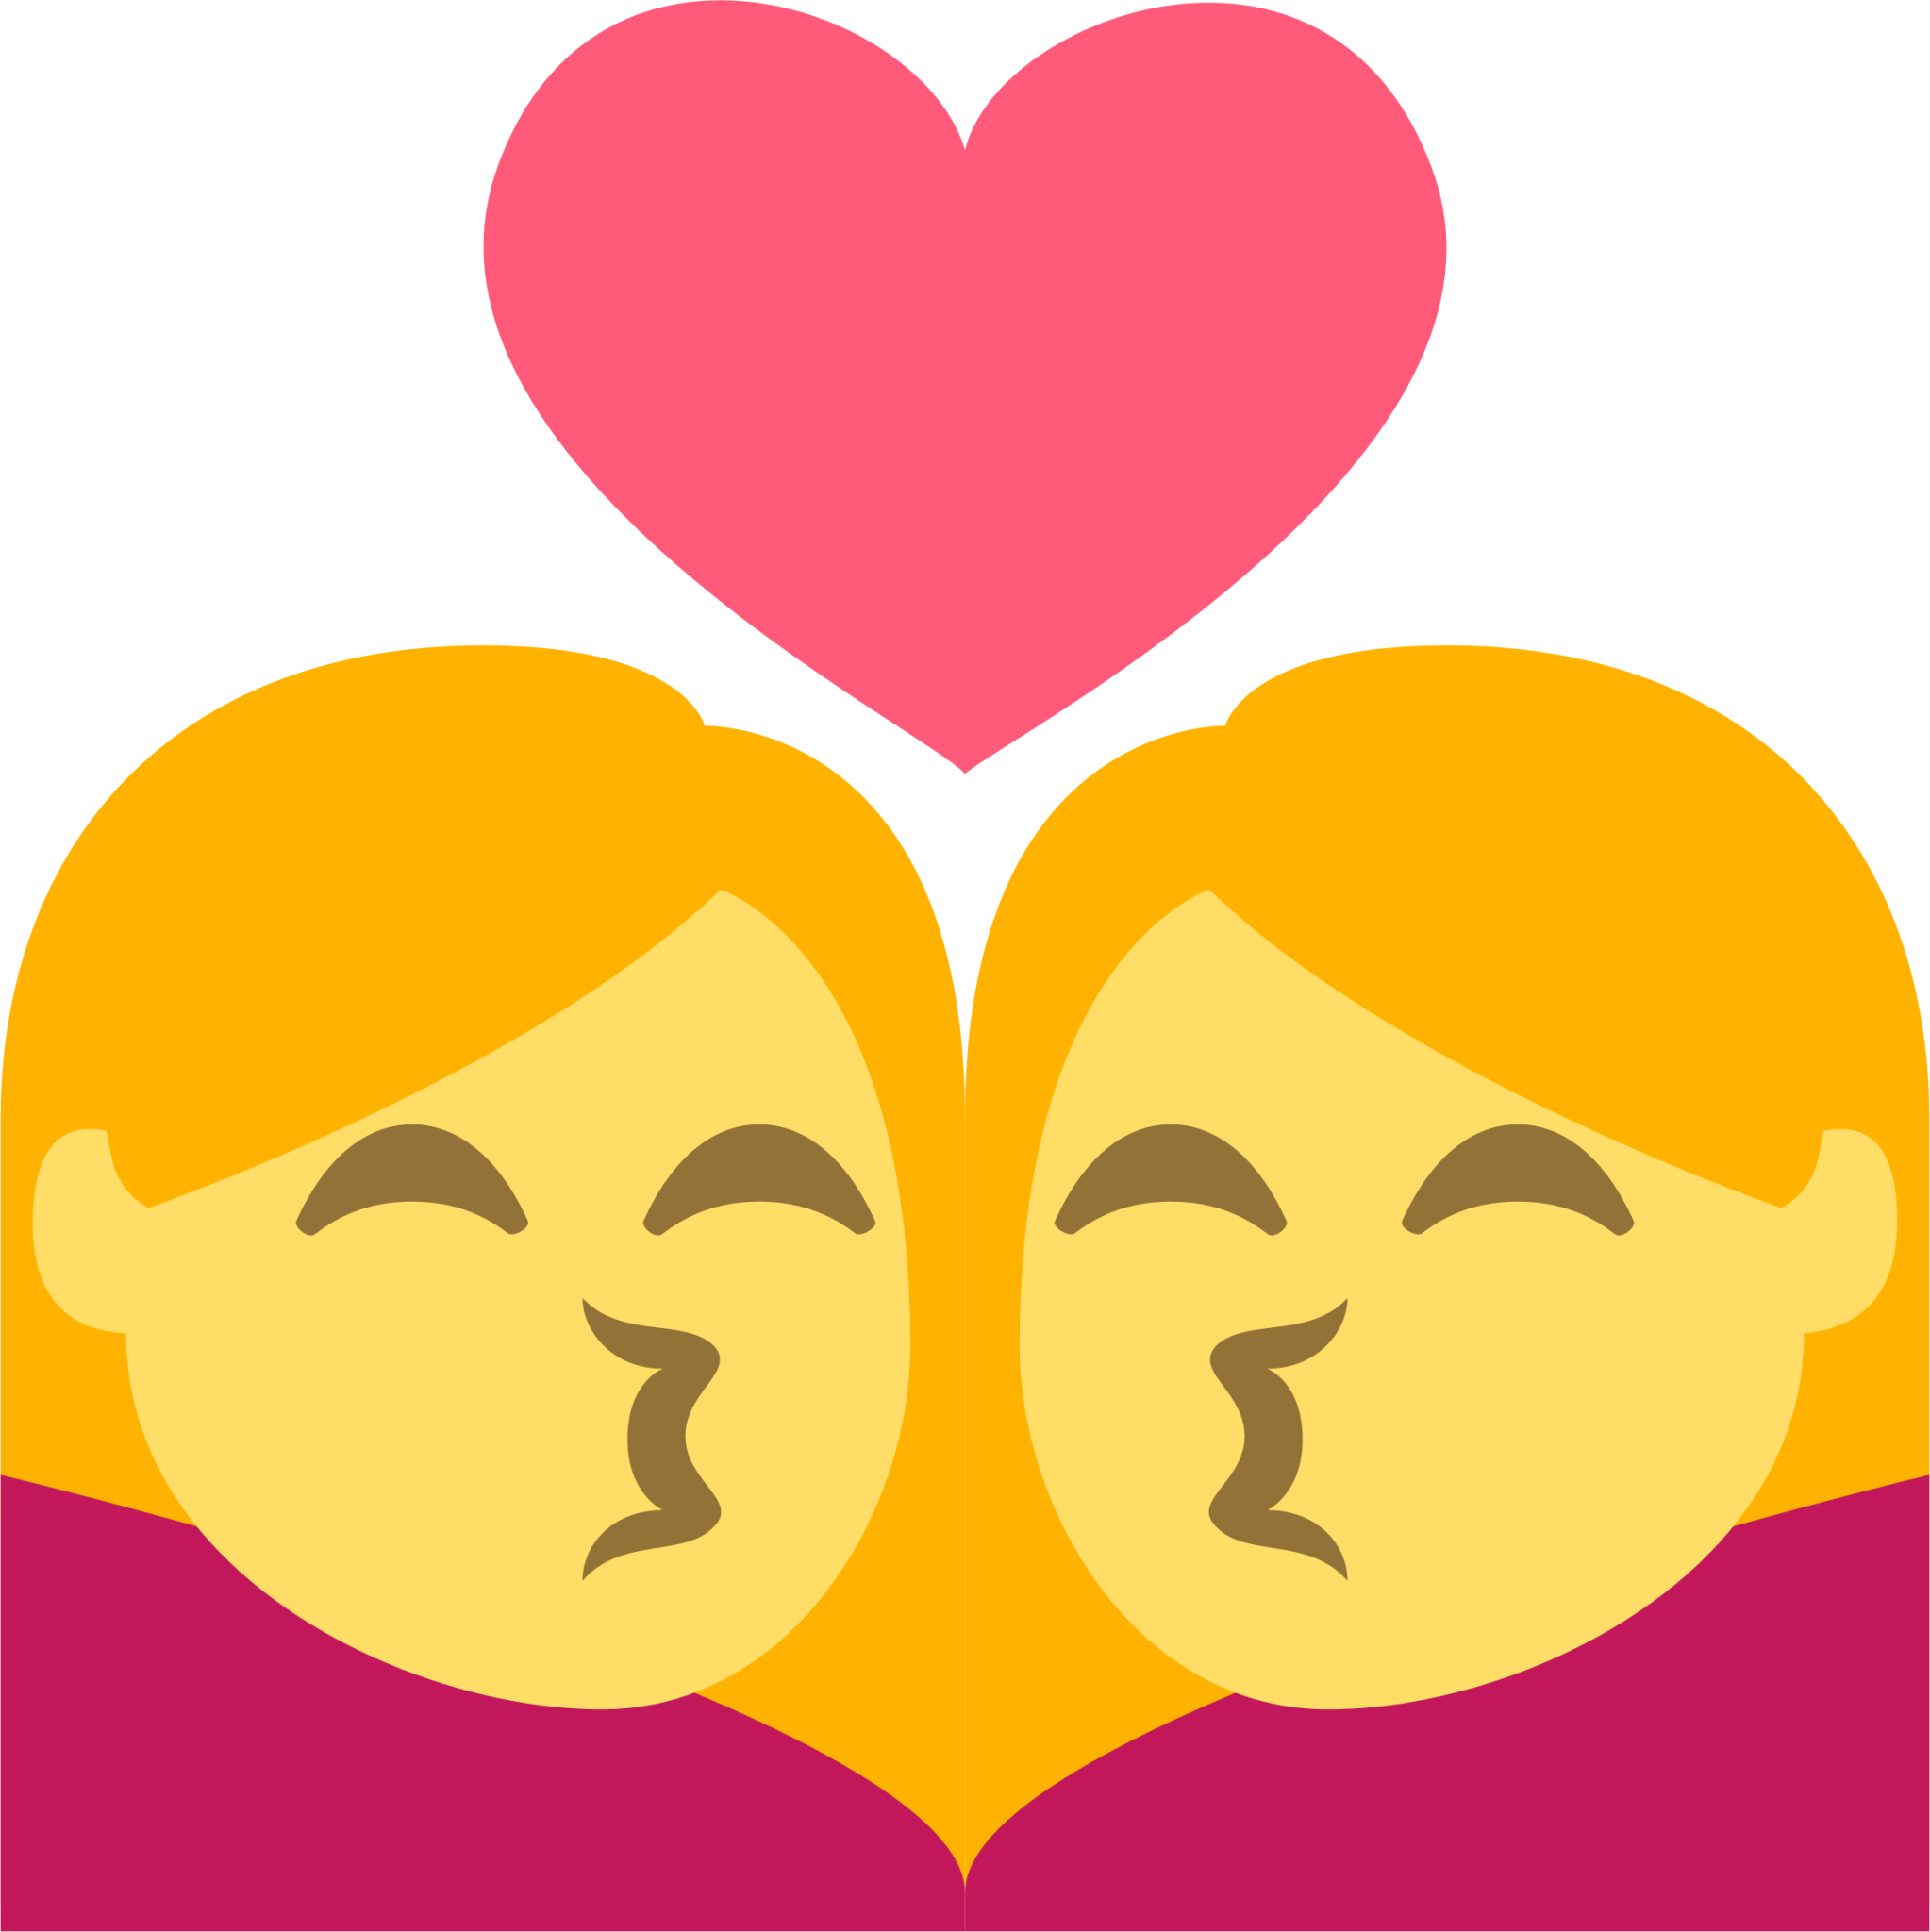 kiss (woman,woman) emoji